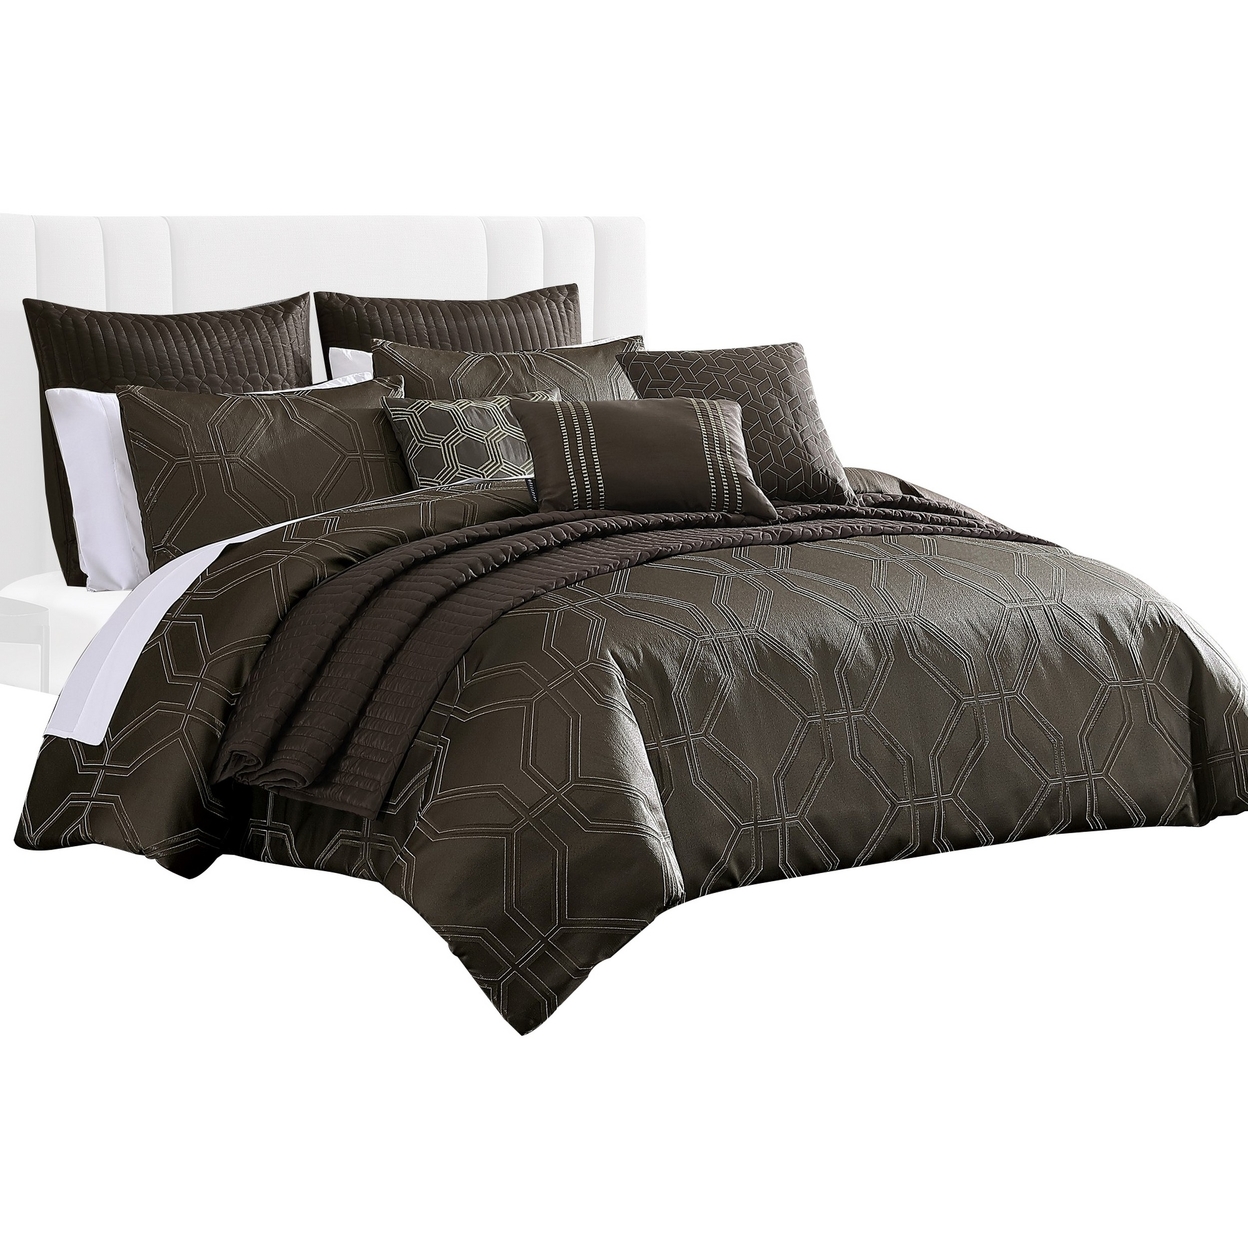 Eve 10 Piece King Comforter Set, 3 Pillows, Geometric Gray Woven Jacquard - Saltoro Sherpi